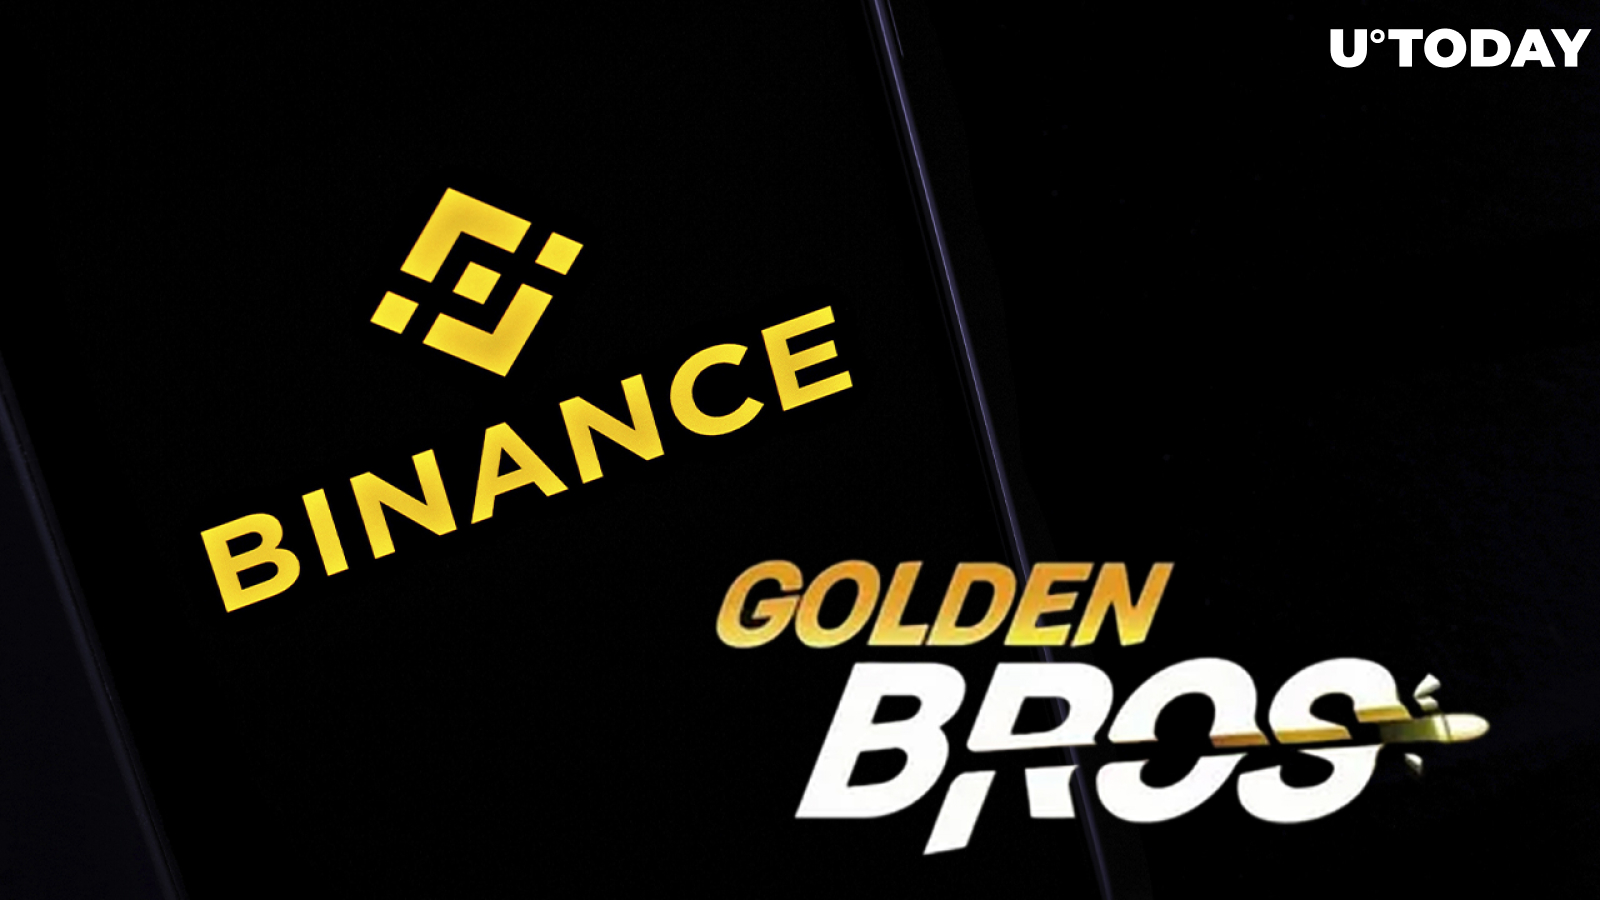 Binance to Host Netmarble's Golden Bros NFT Collection Presale